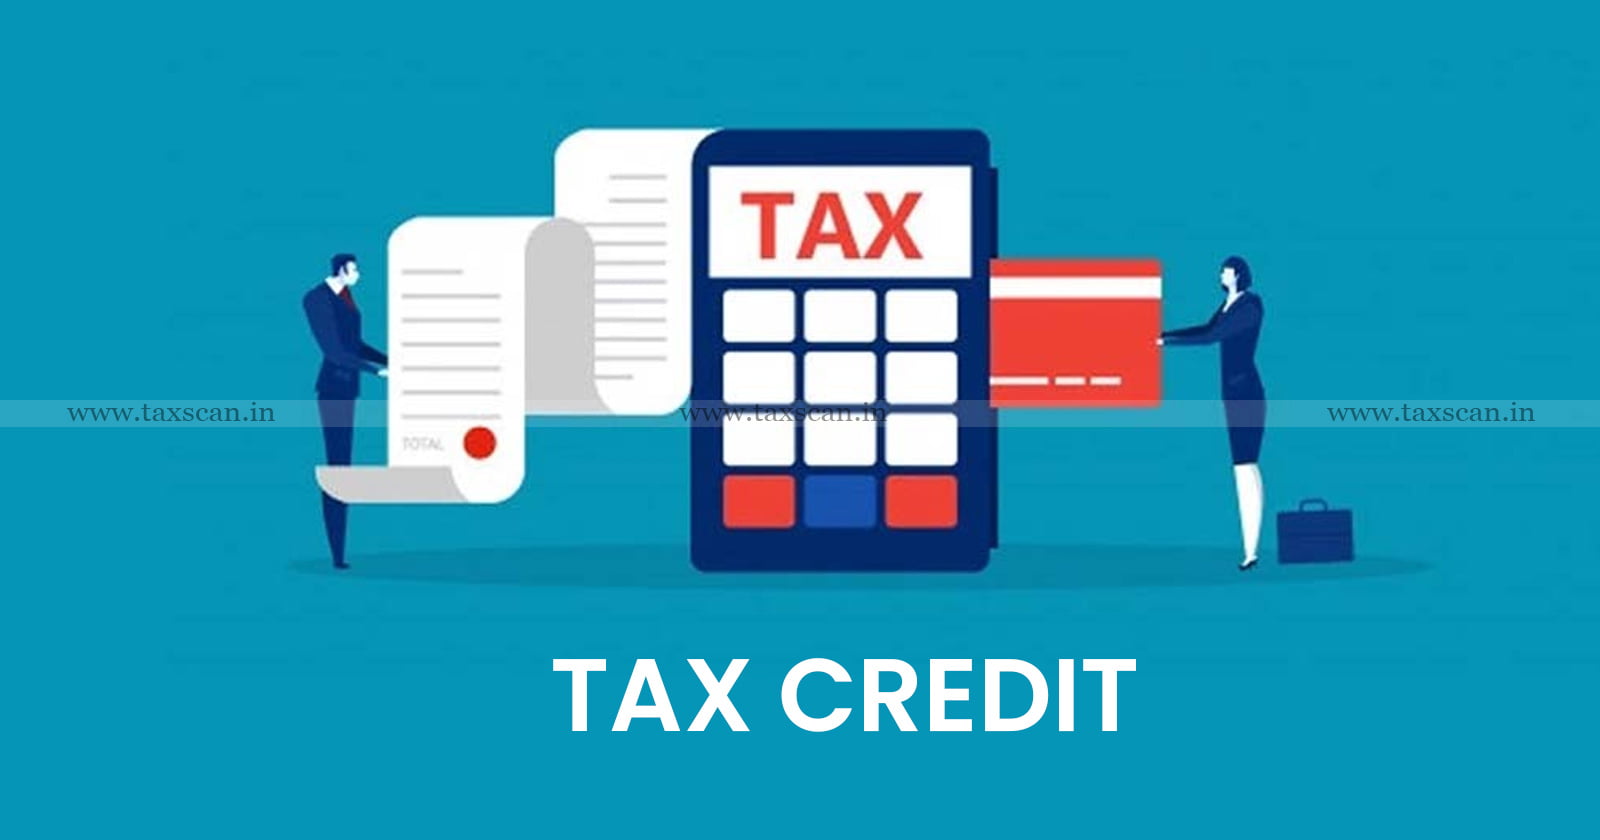 Form - 67 - Conclusion - of - Assessment - ITAT - Tax - Credit - Tanzania - Tax - Liability - TAXSCAN